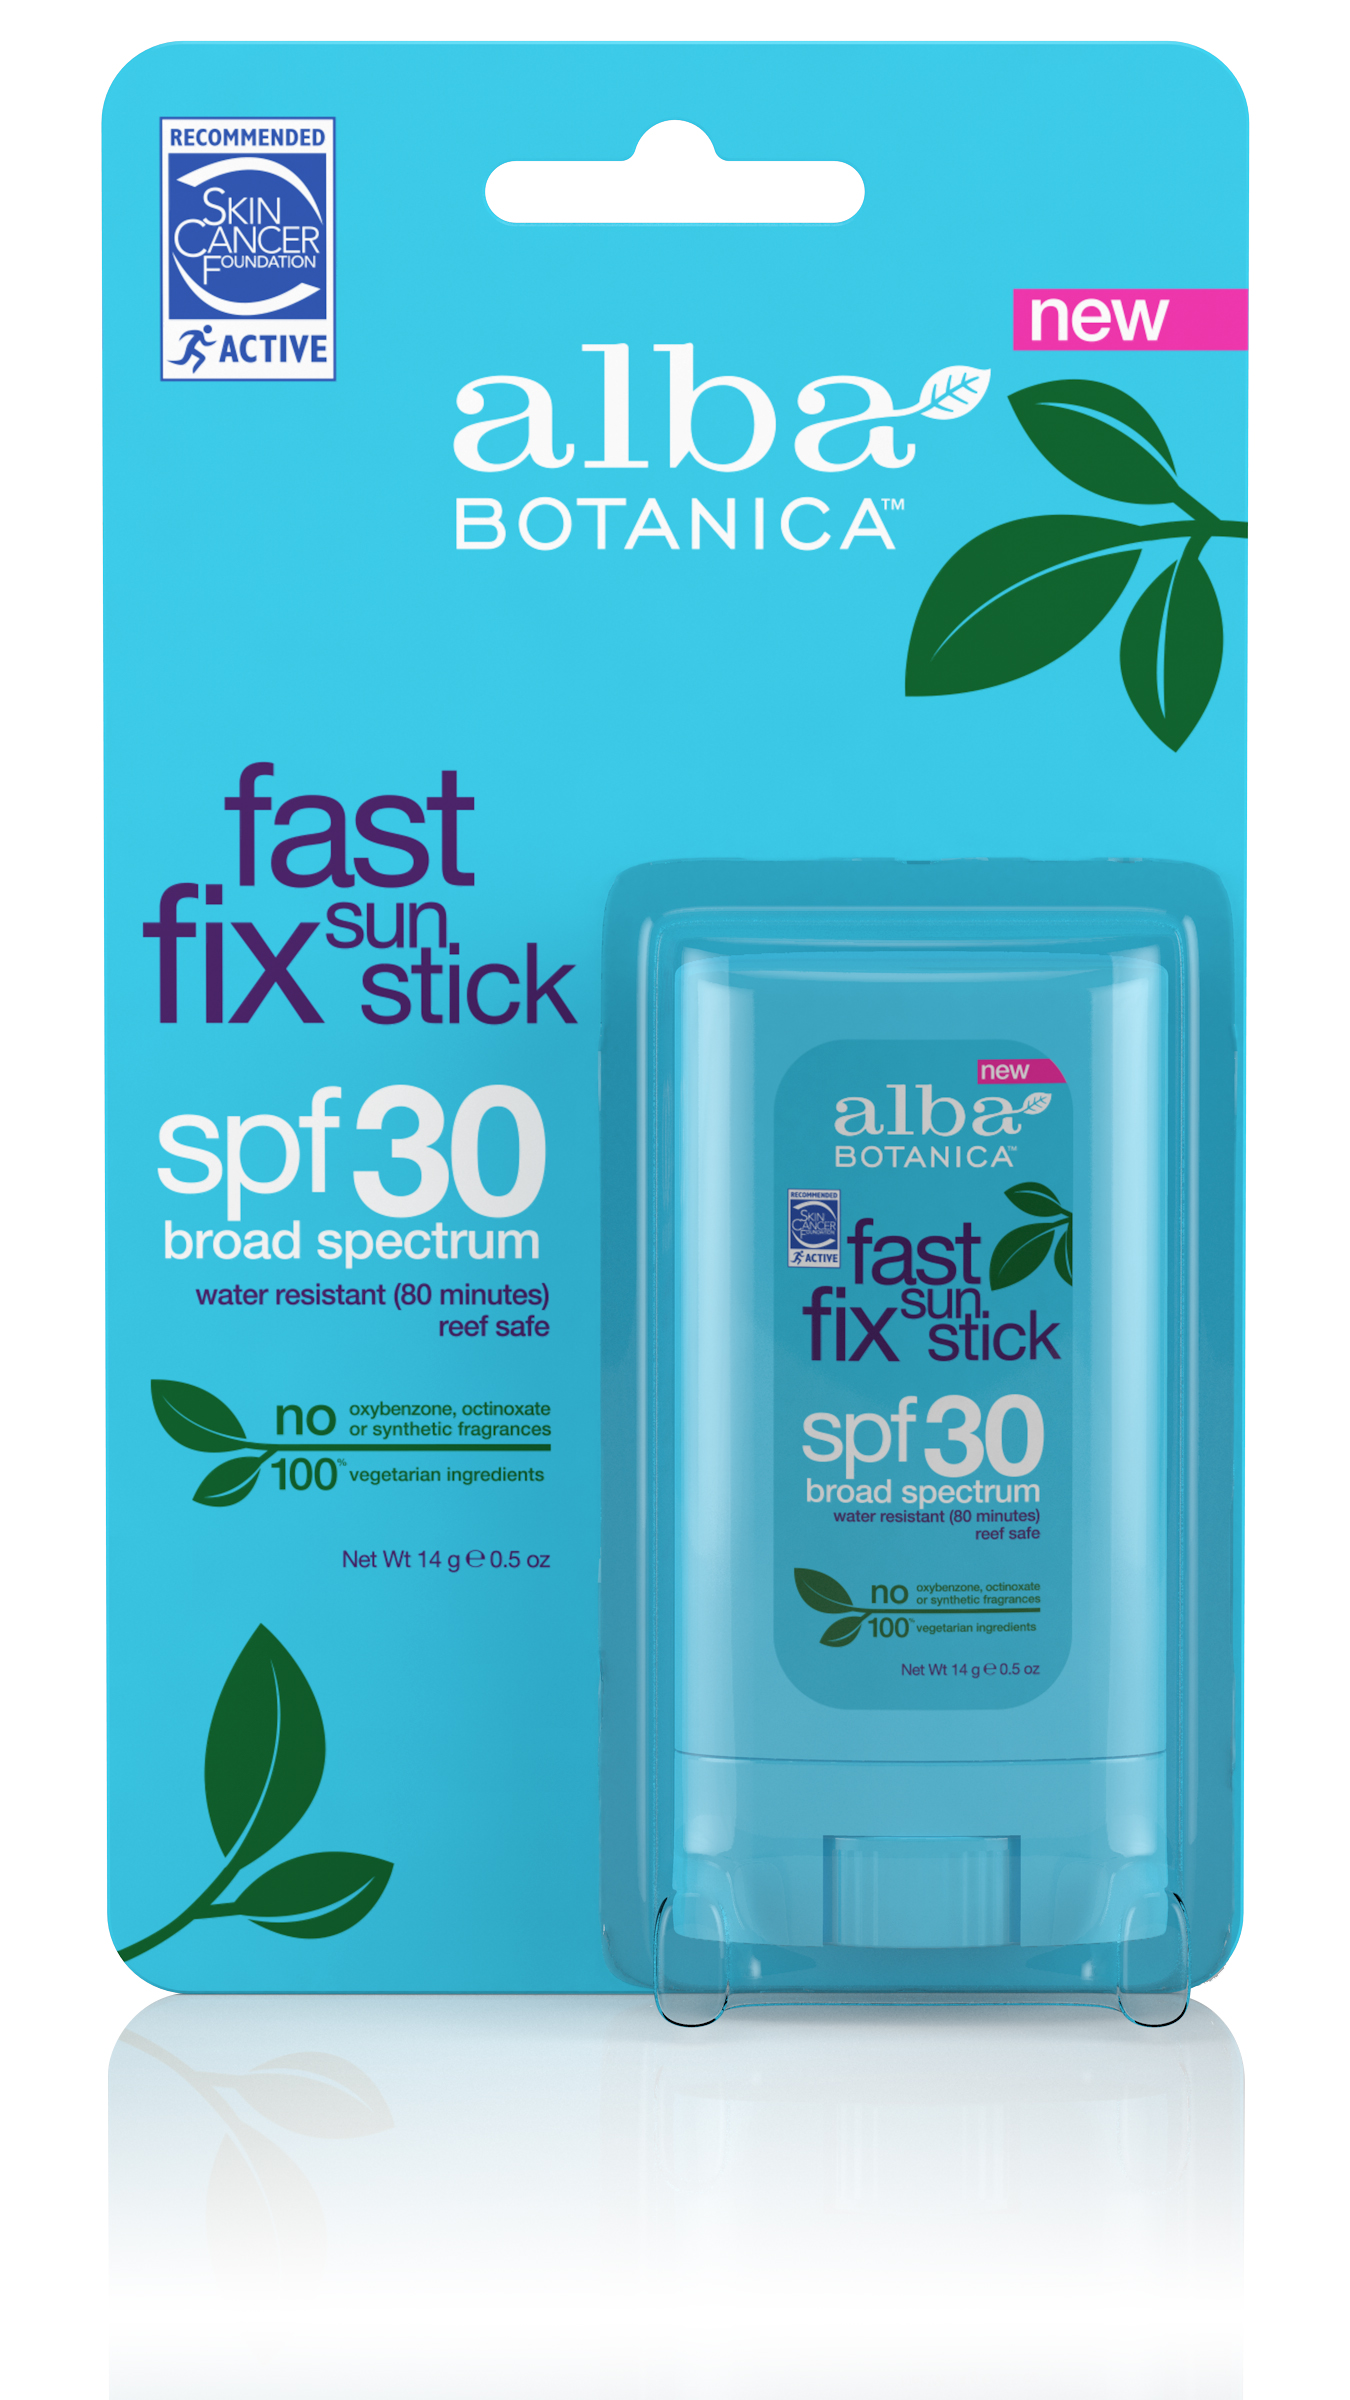 Alba Botanica Fast Fix Sun Stick Sunscreen SPF 30, 0.5 oz - image 1 of 7